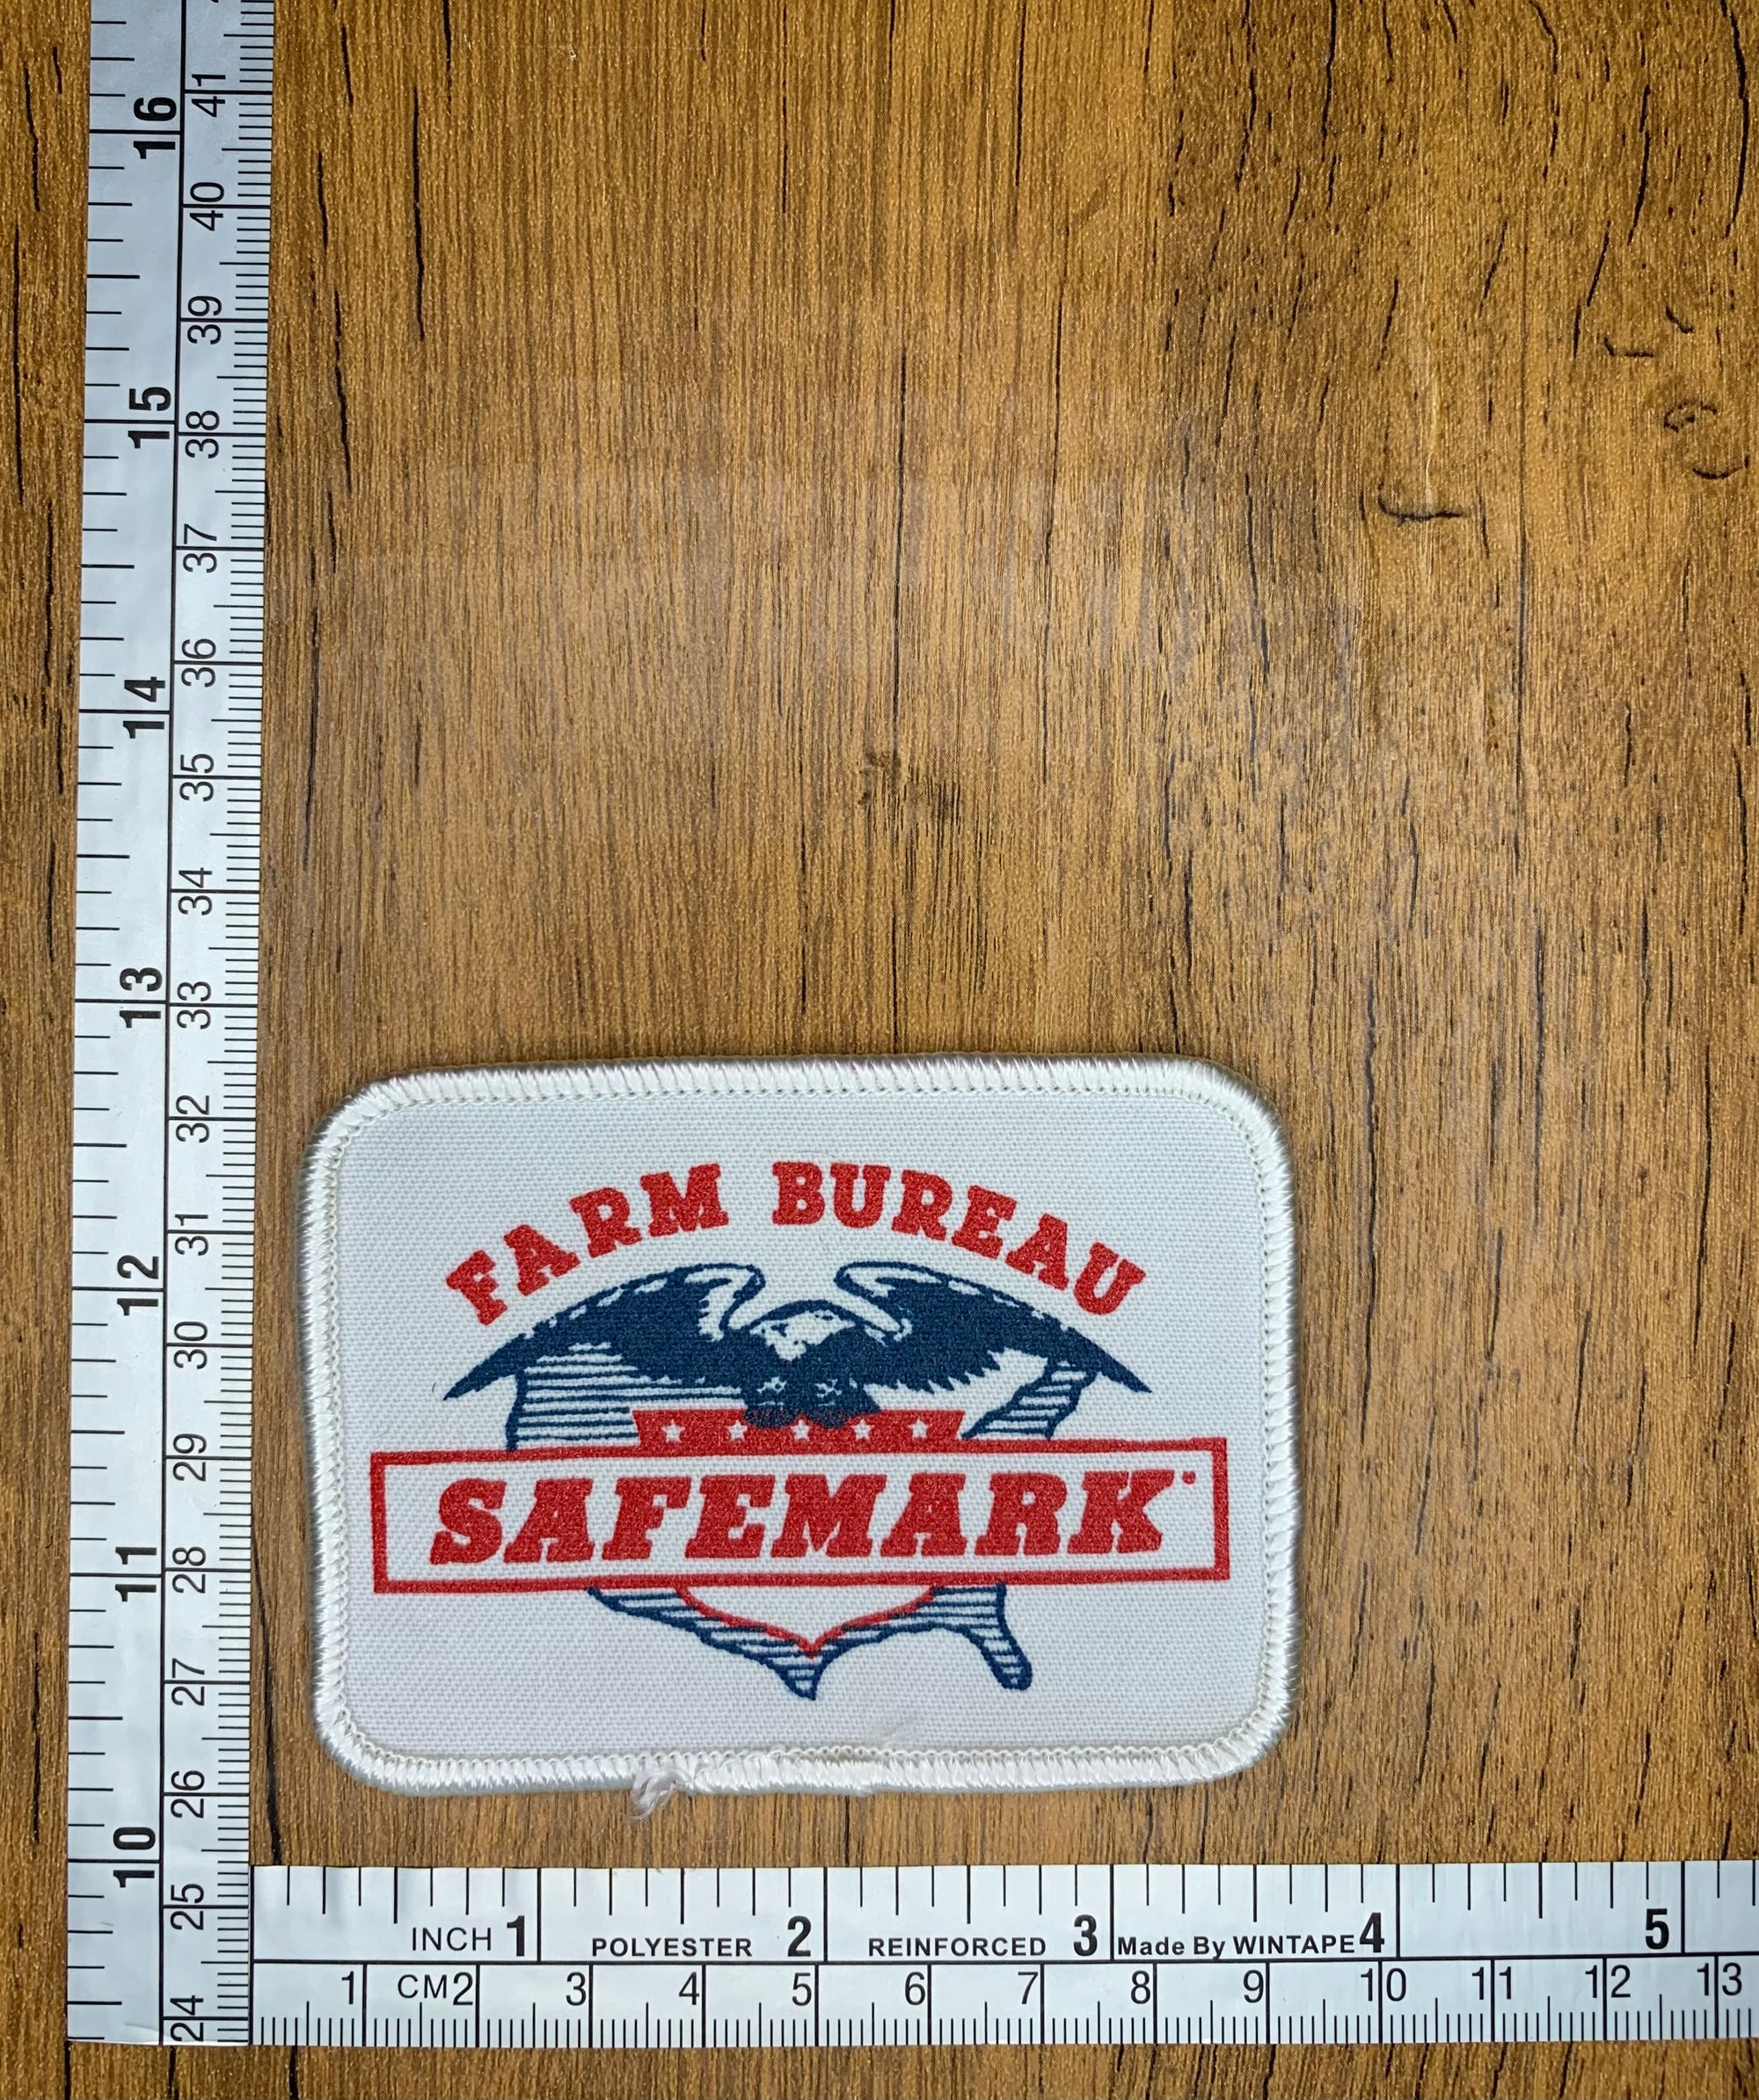 Farm Bureau Safemark